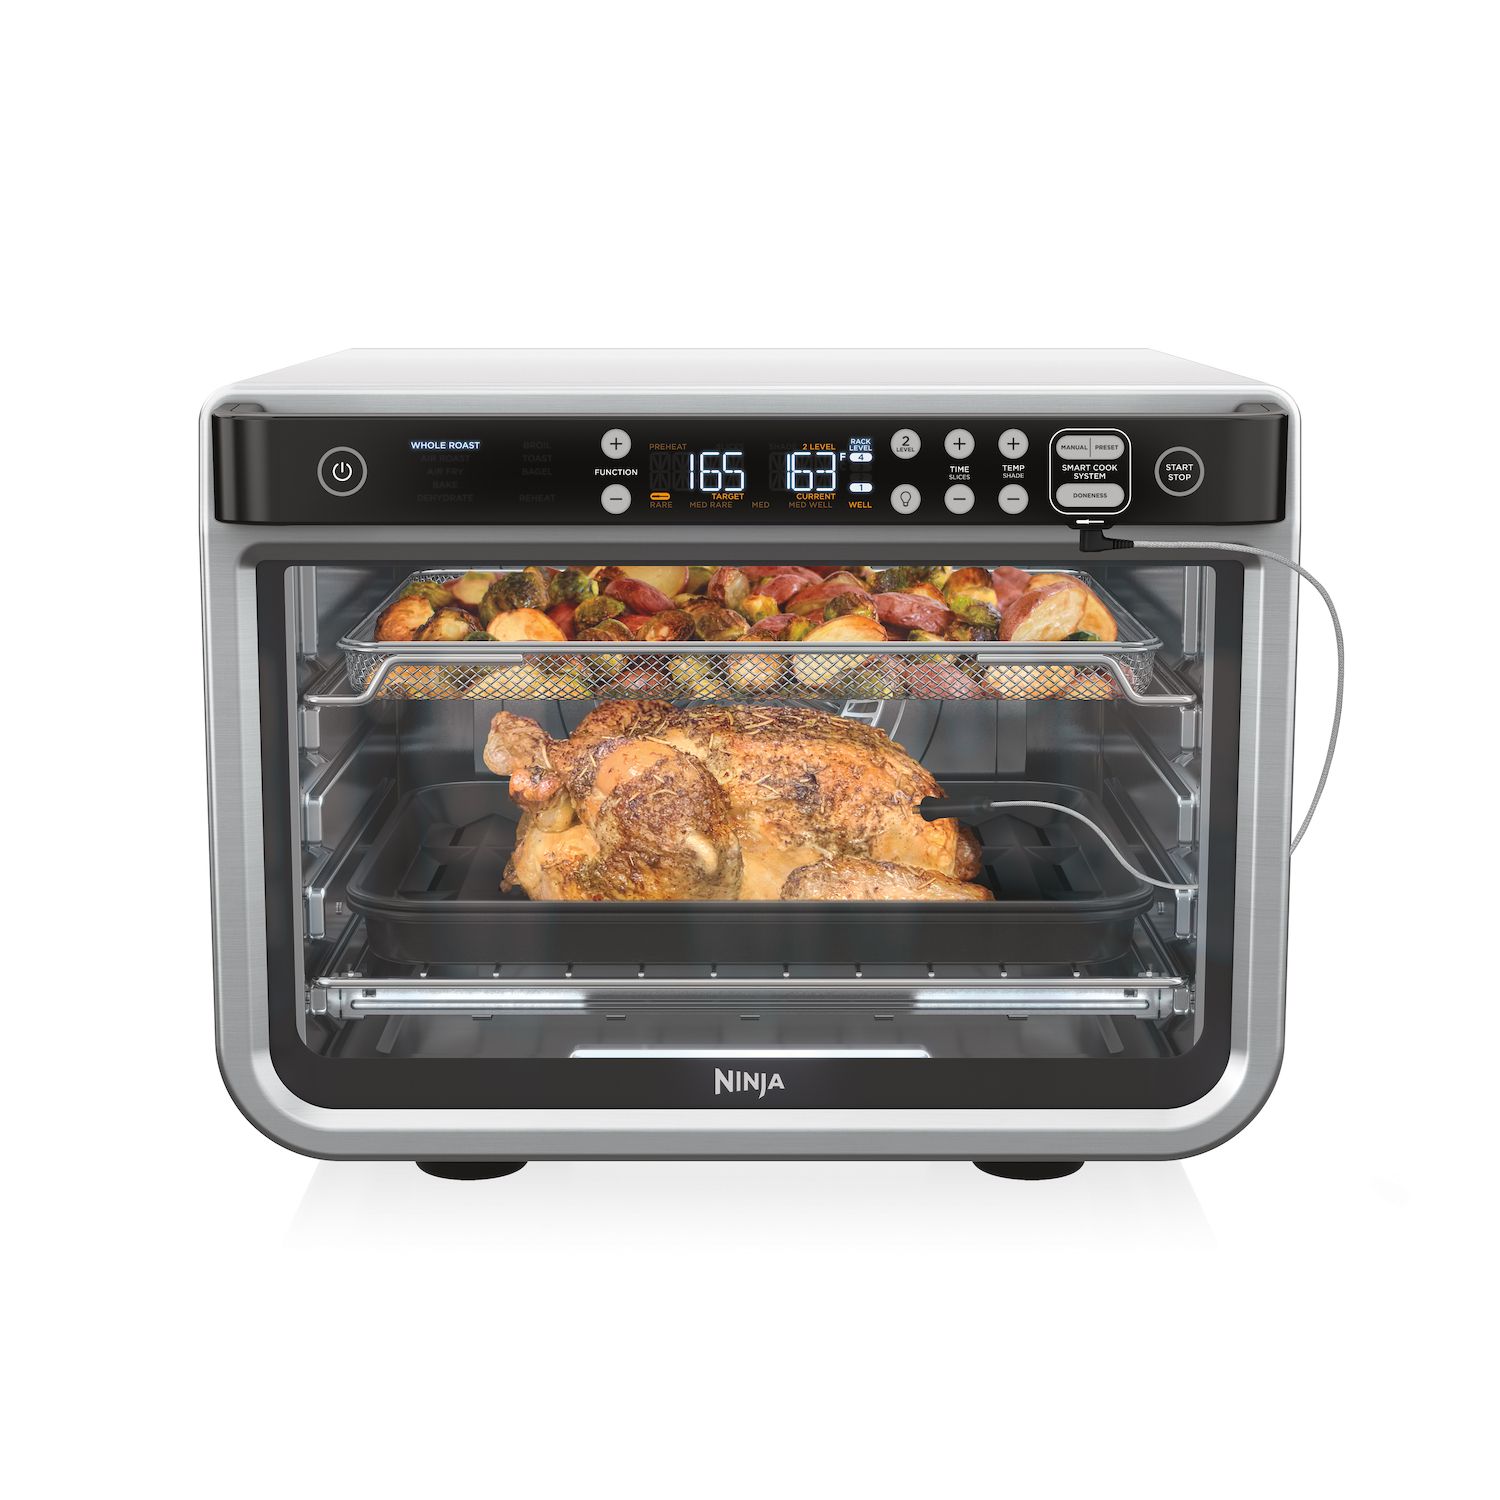 Instant Omni Plus 18L vs Cuisinart TOA-60 Toaster Oven: Elaborate